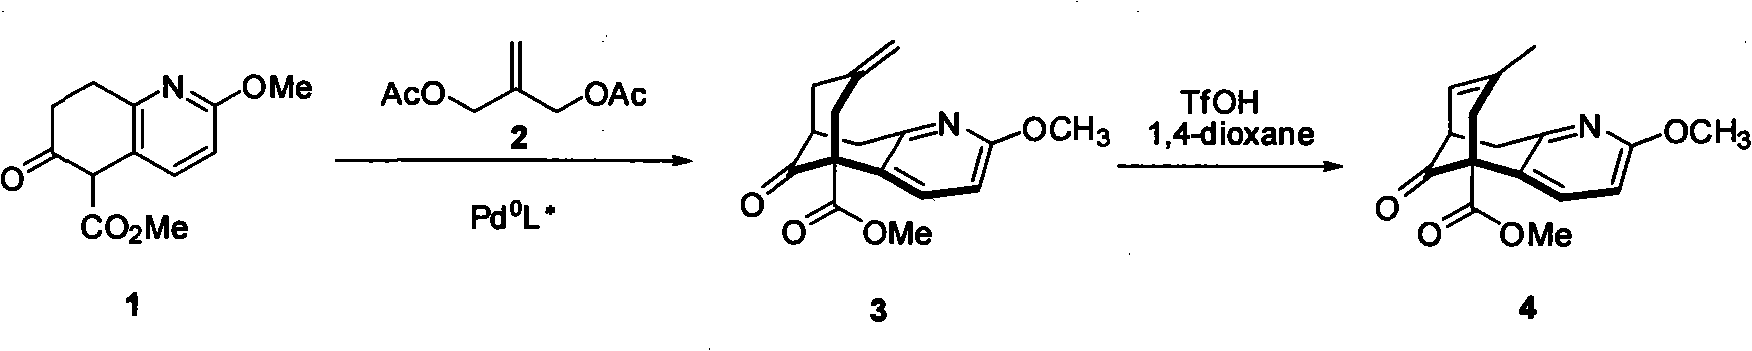 Asymmetric synthetic method of (-)-huperzine key intermediate